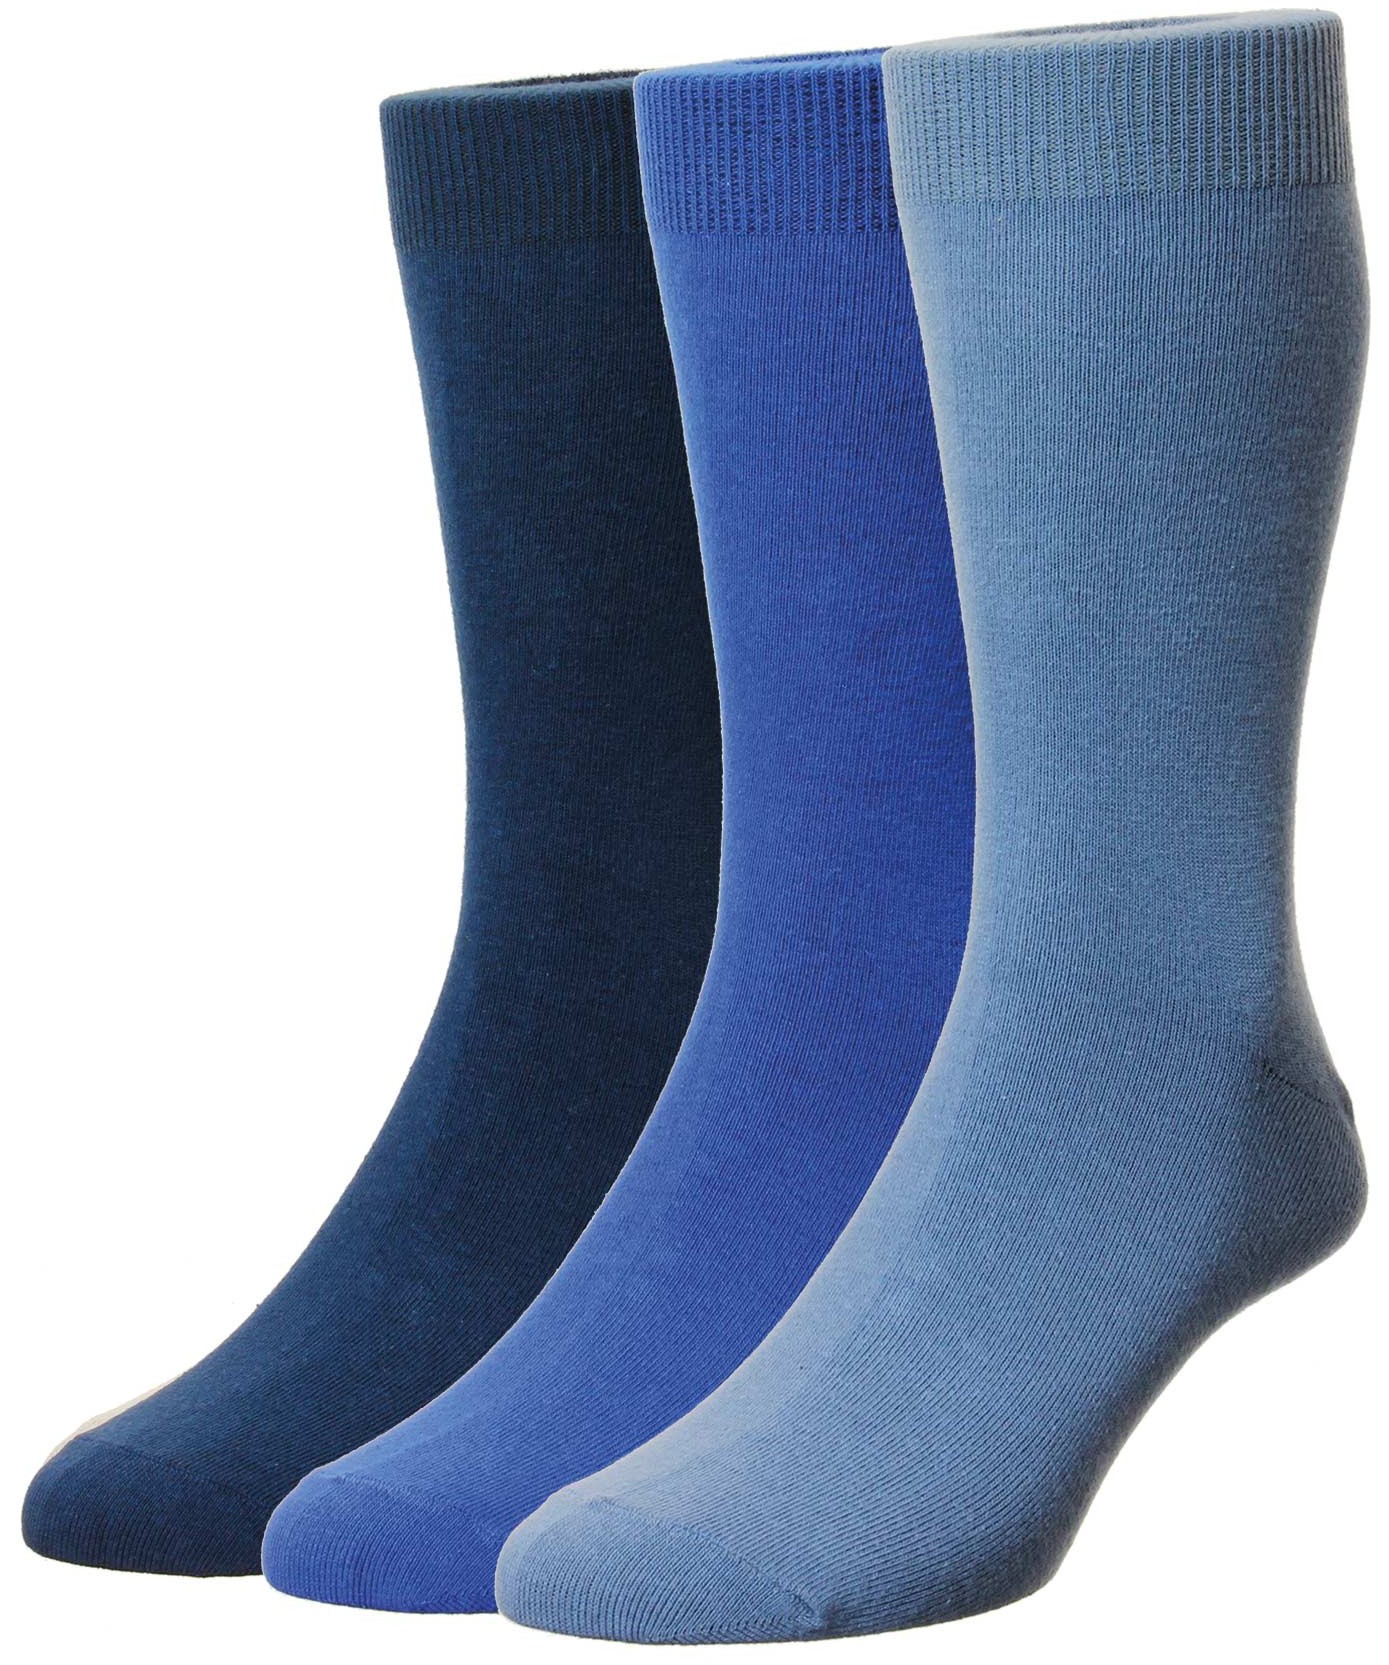 HJ Socks HJ7116/3 BCF Size 6-11